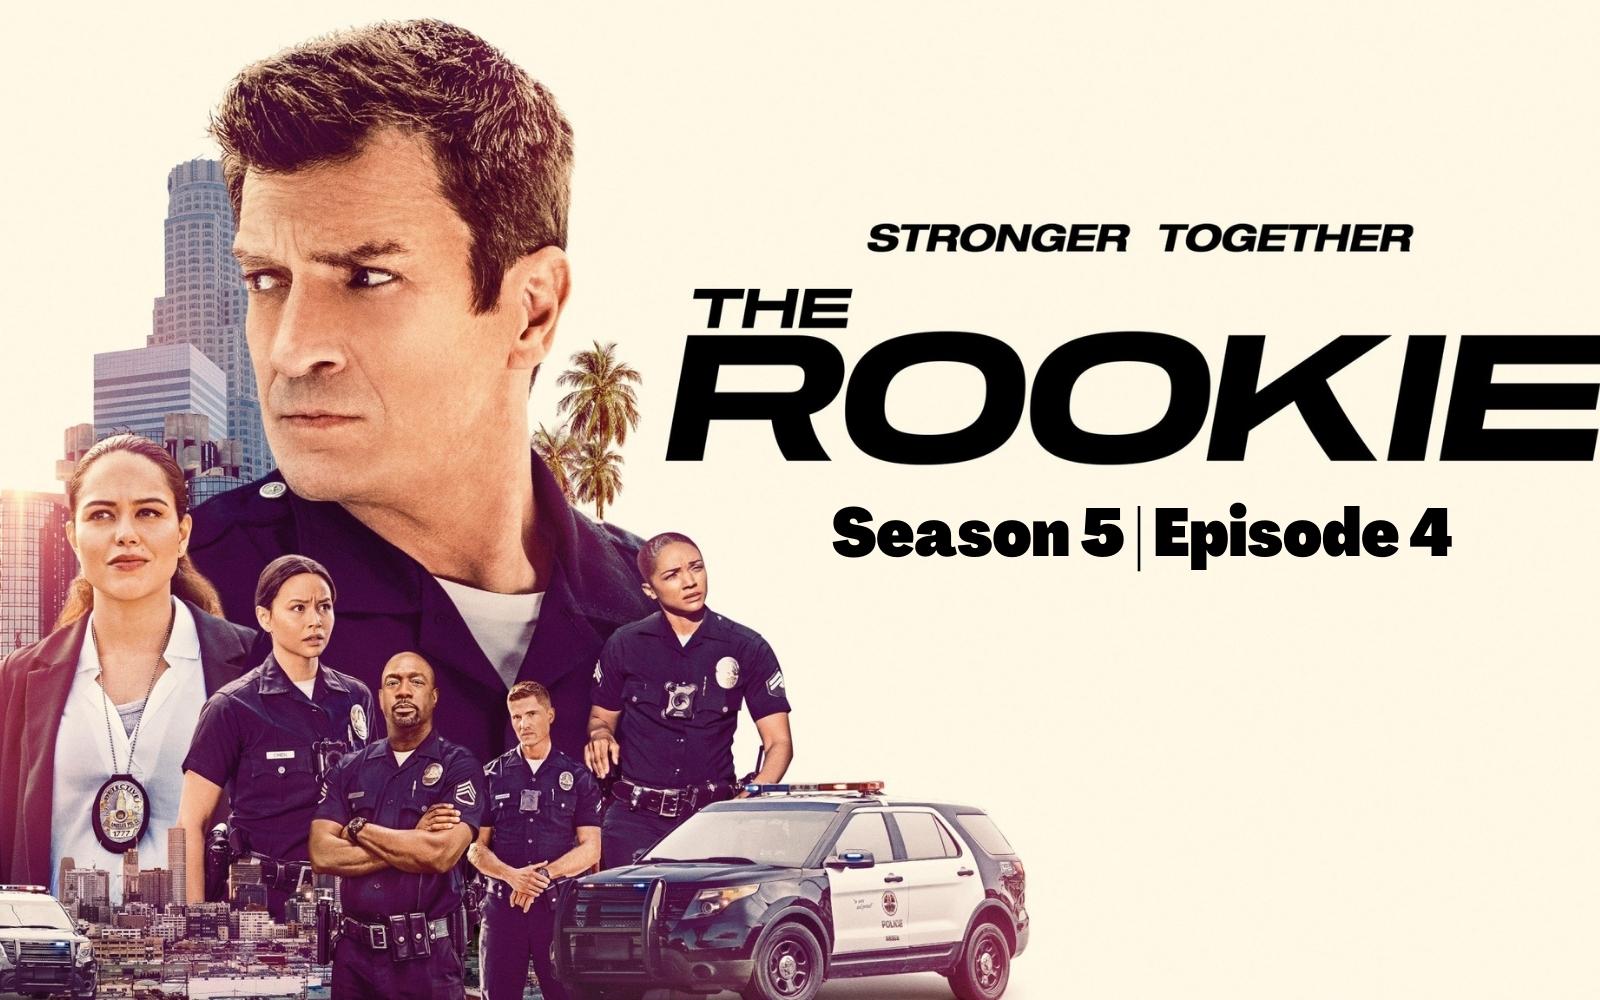 The Rookie Season 5 Episode 4 ⇒ Spoilers, Countdown, Speculation, Recap, Cast & News Updates